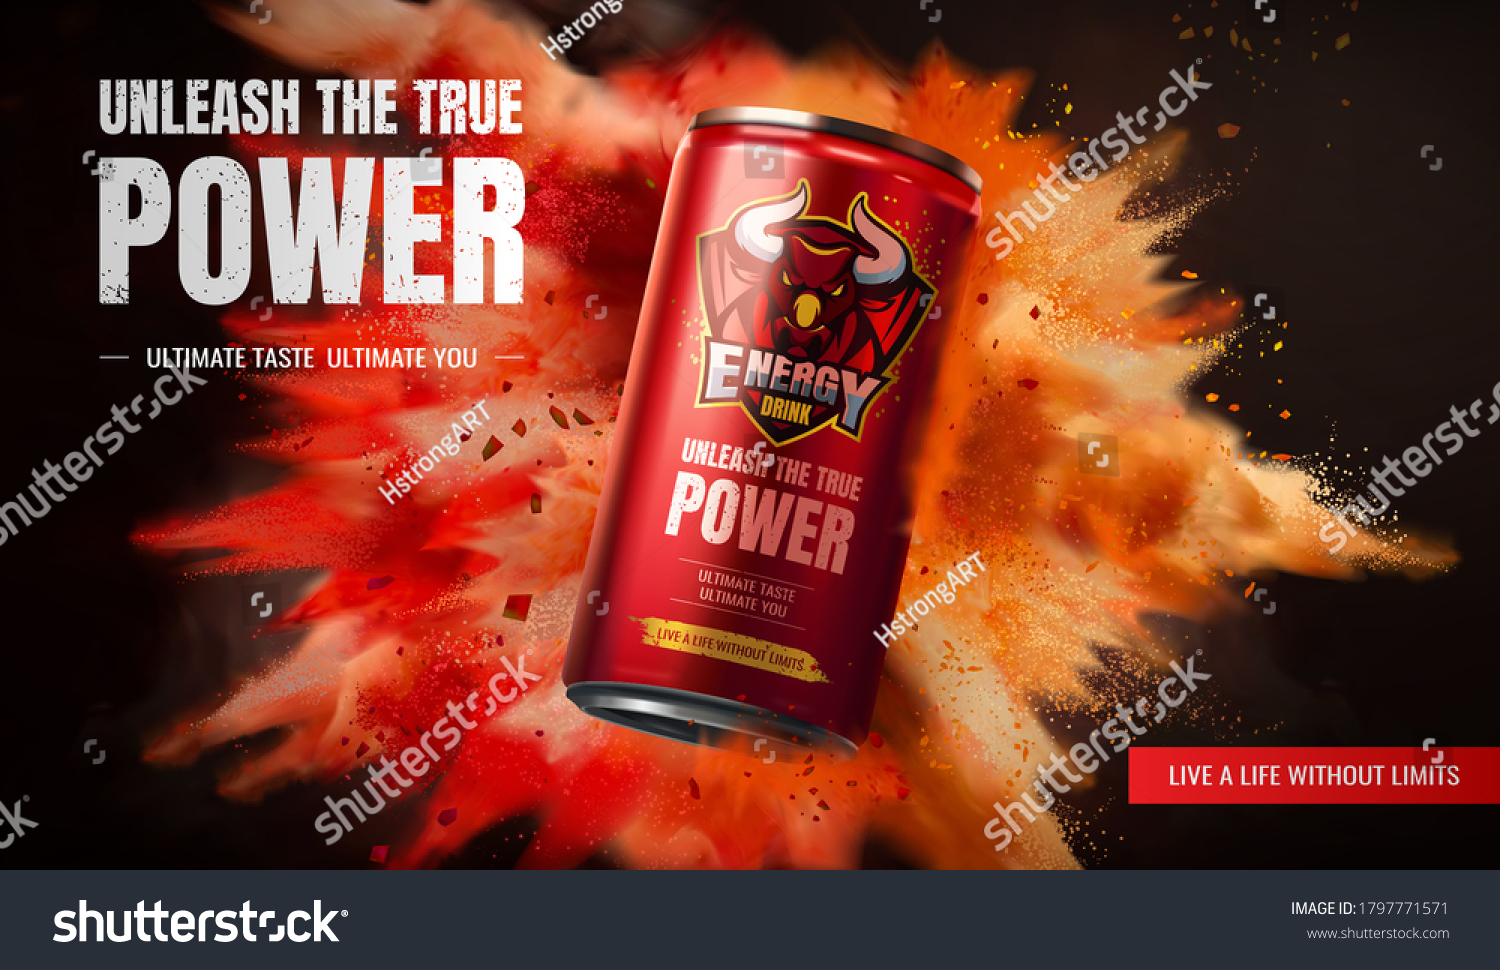 Energy drink ad design on exploding powder effect background in 3d illustration #1797771571